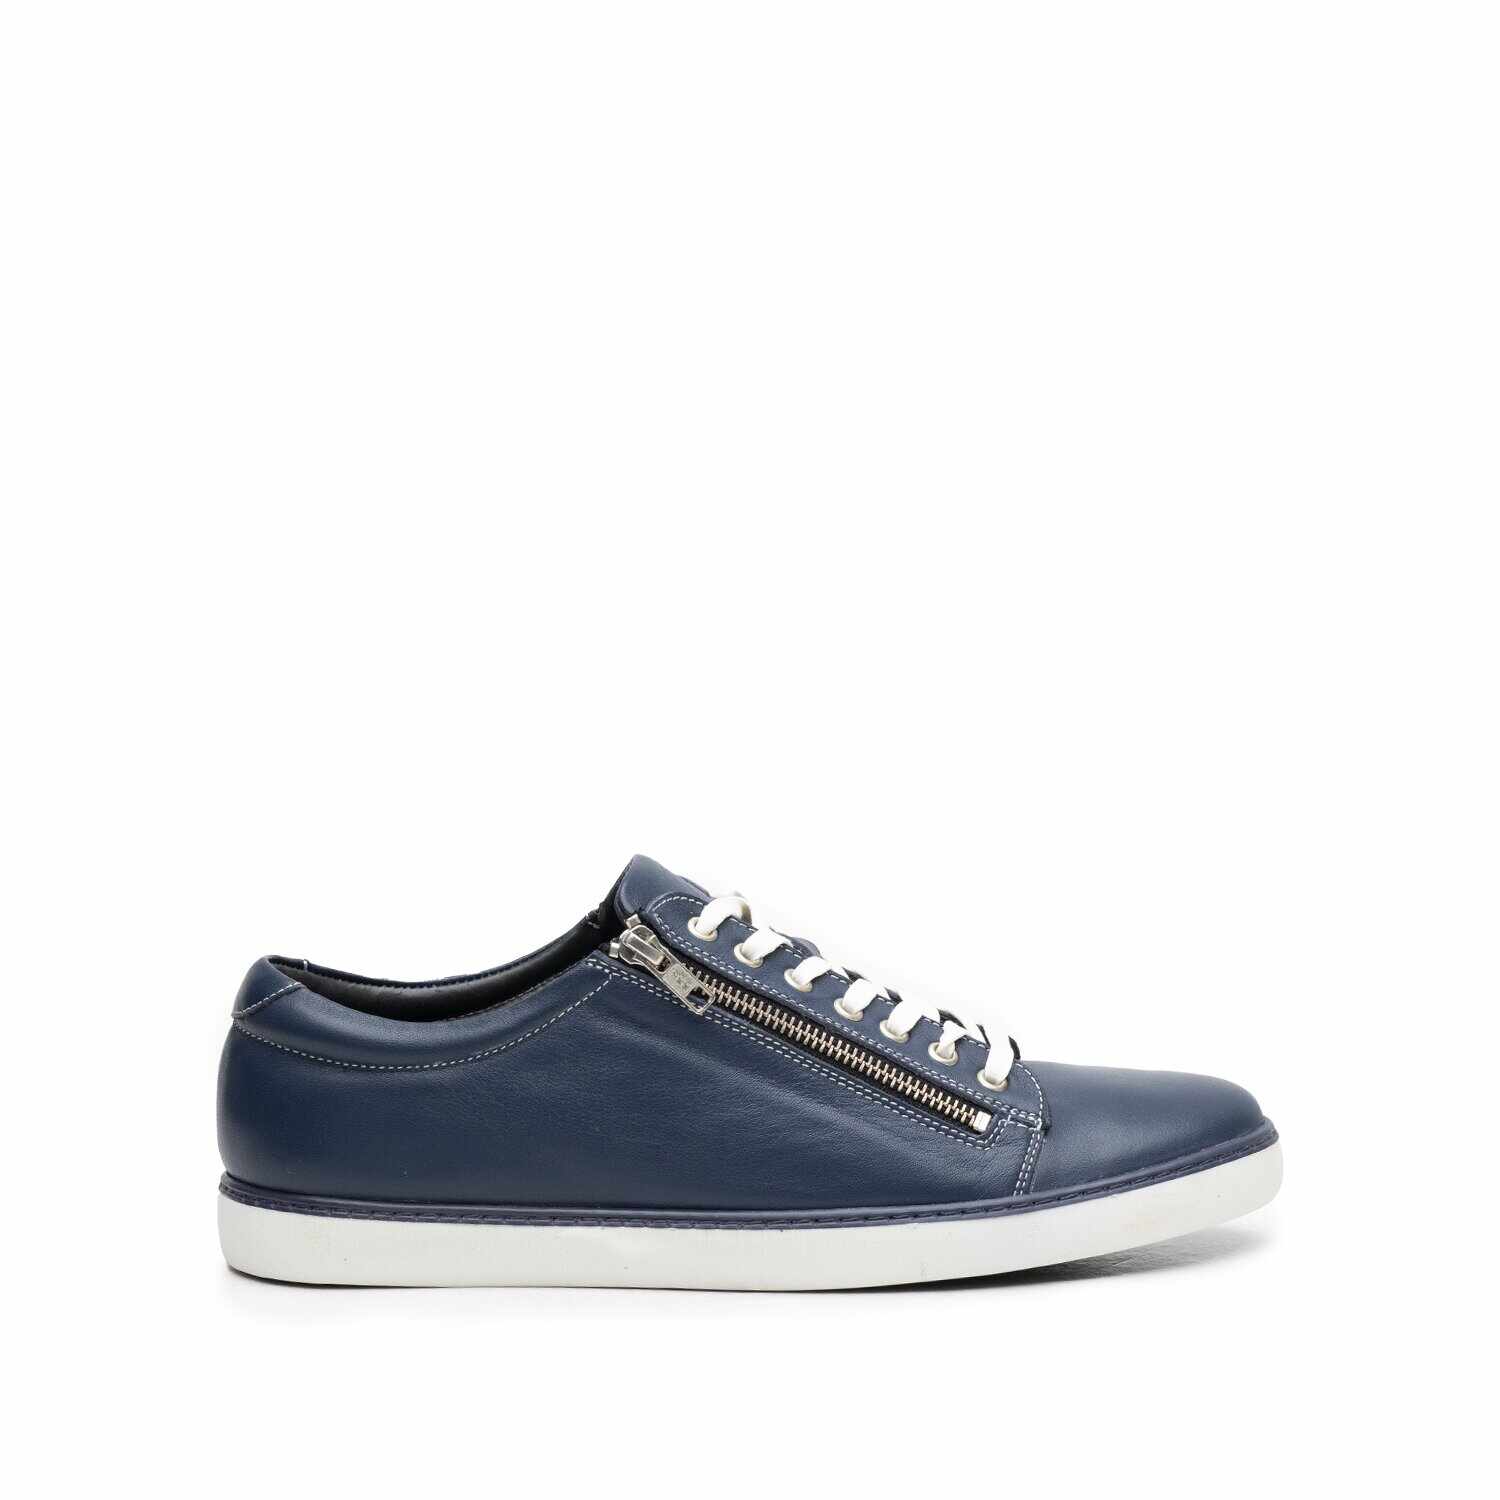 Pantofi sport barbati din piele naturala, Leofex - 801 blue box